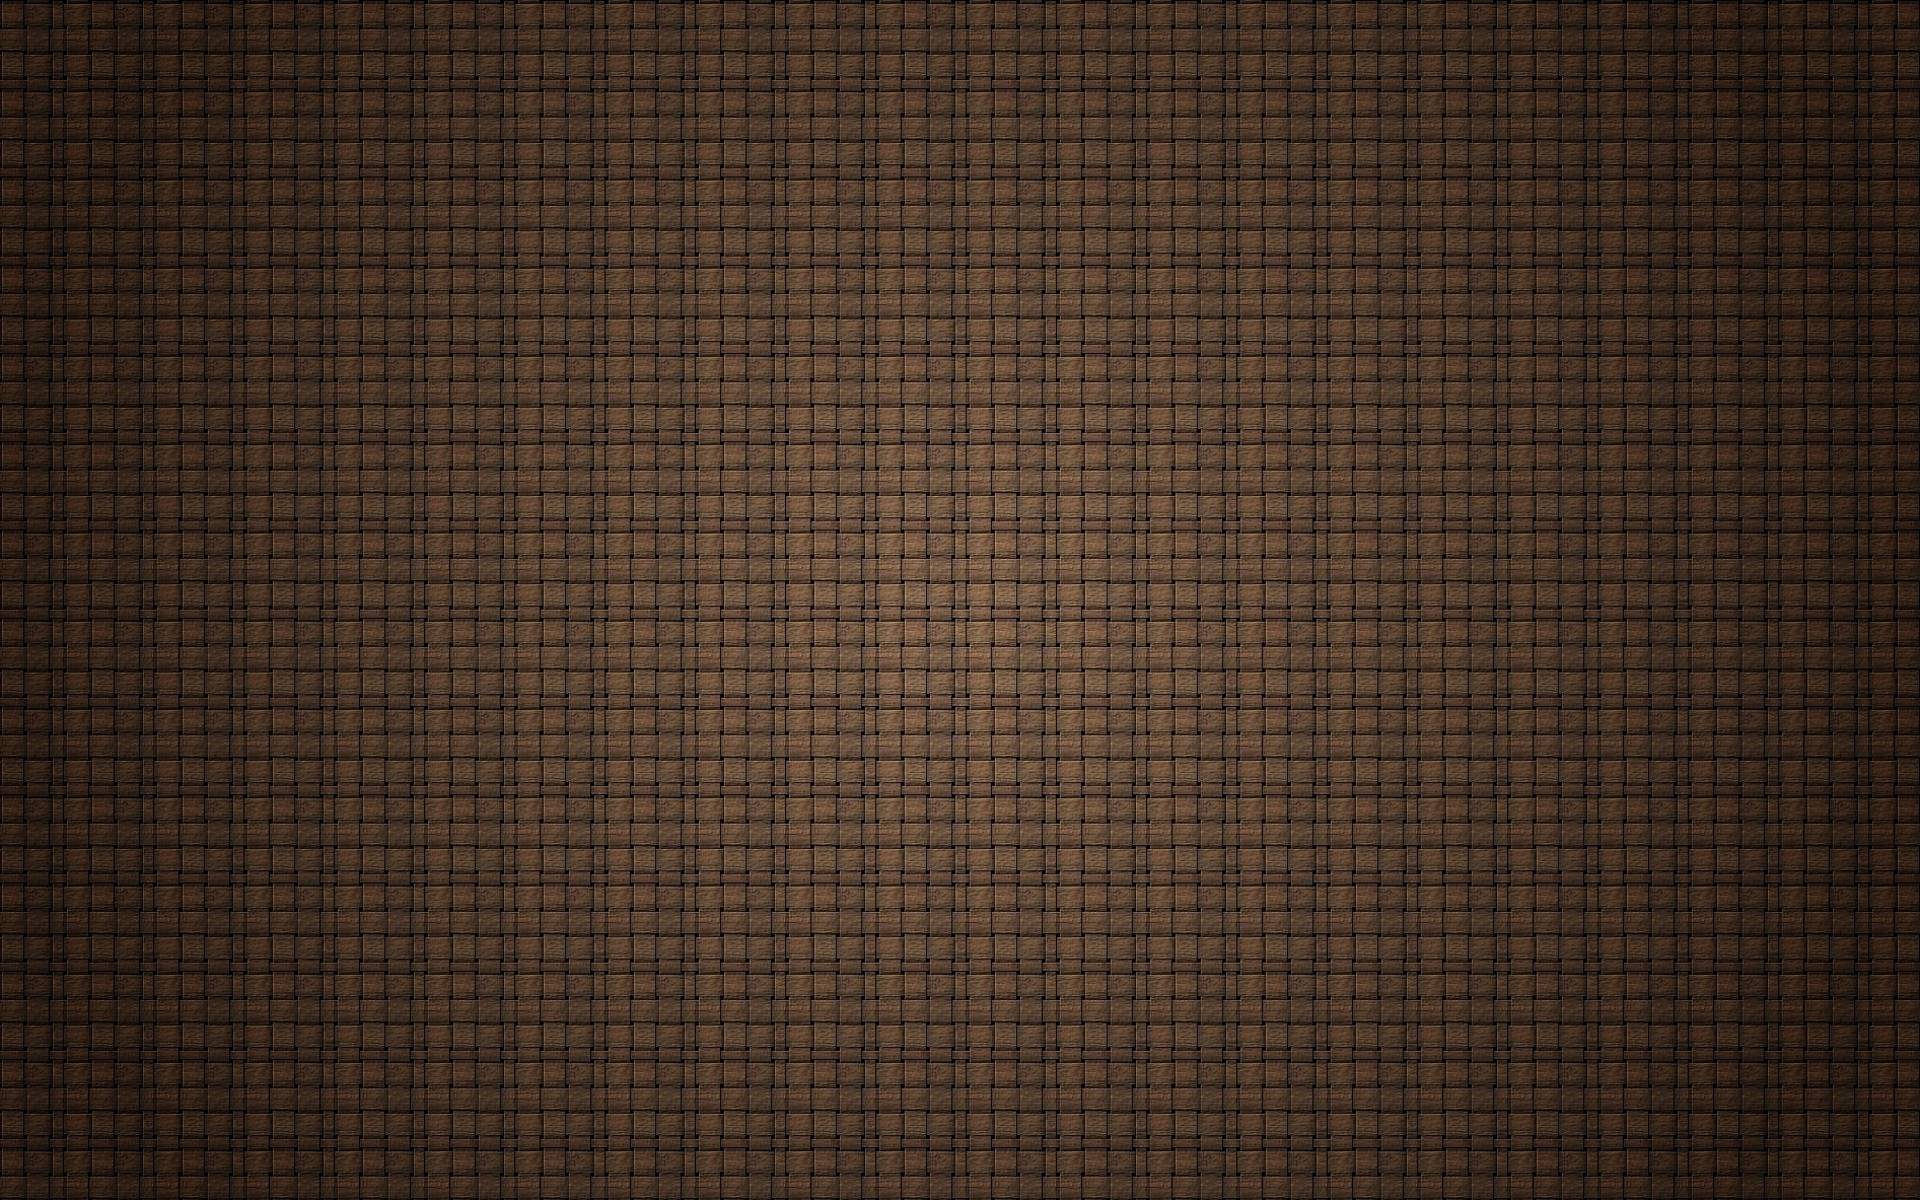 Texture wallpaper brown image